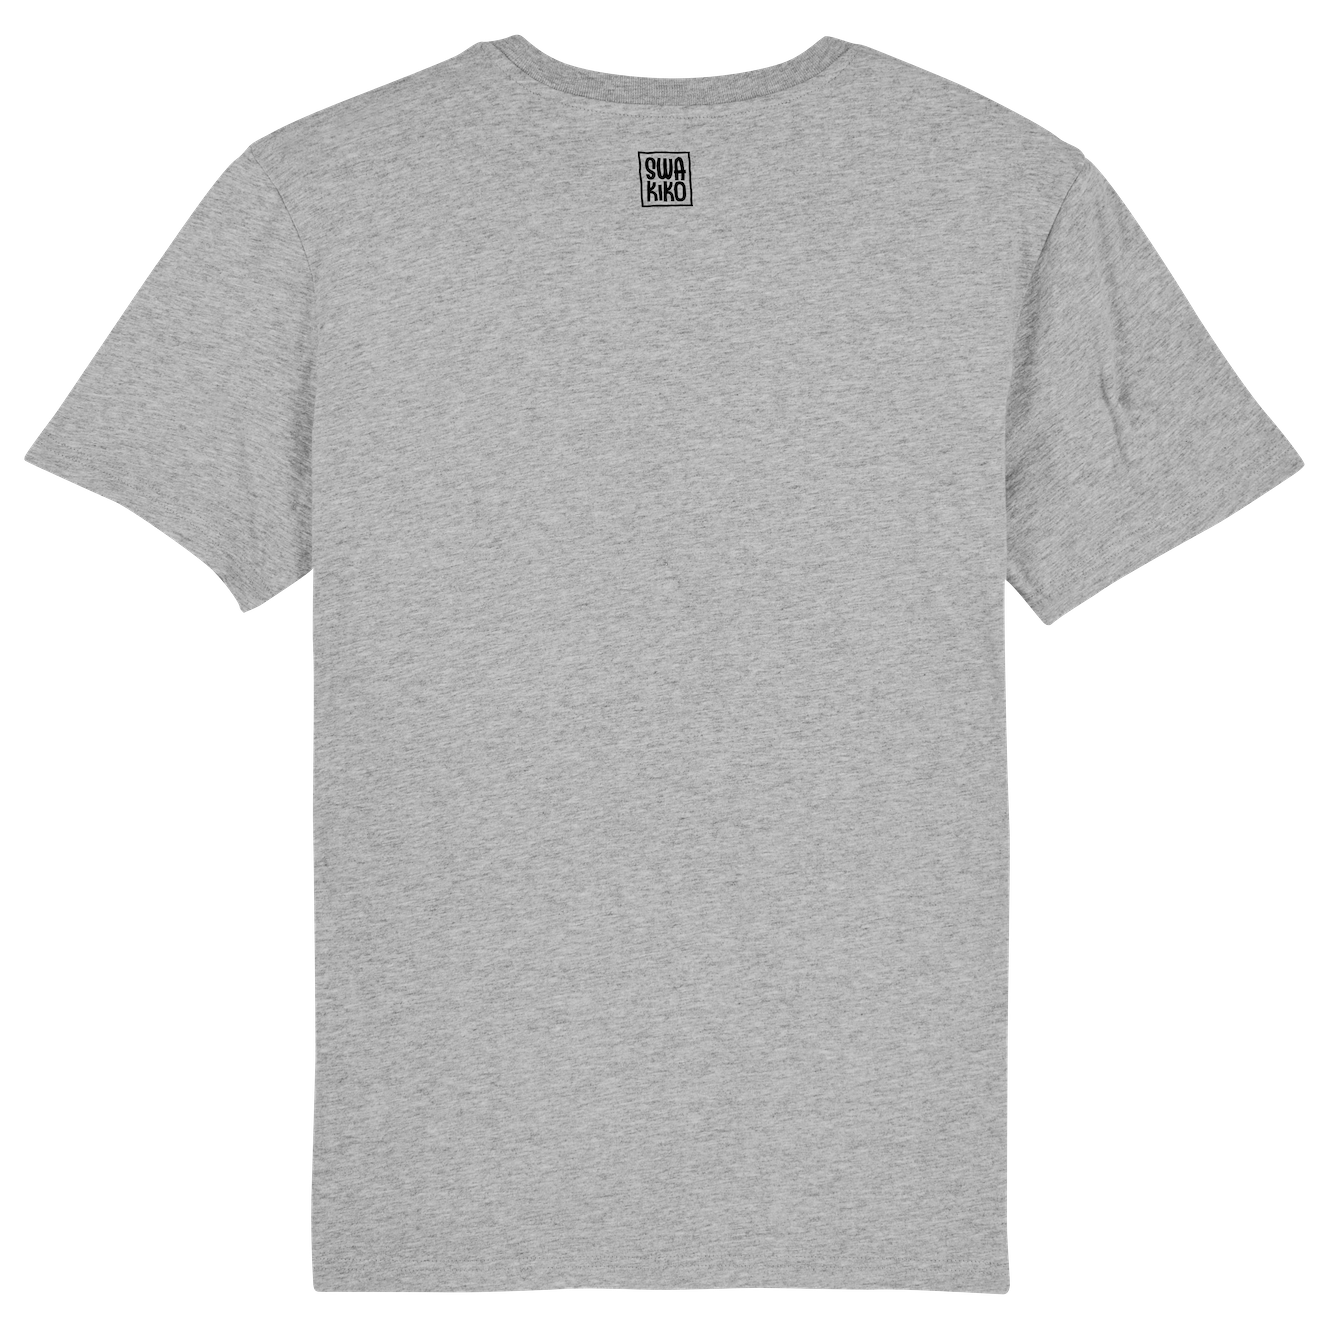 Logo SWAKiKO on grey Bonaire T-shirt